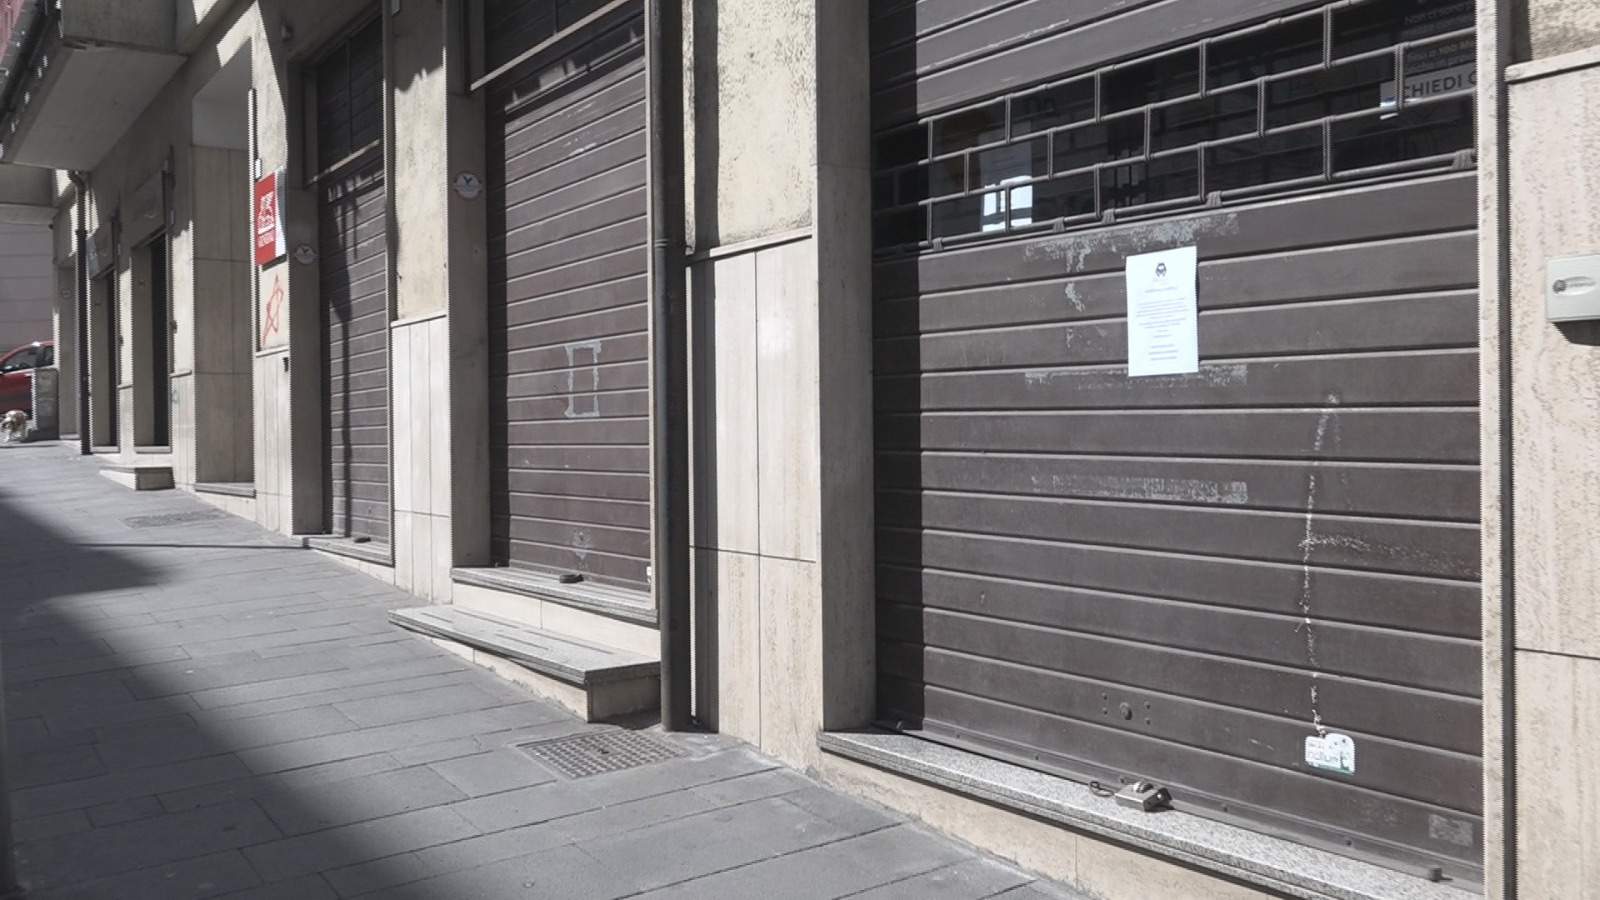 Avellino| Emergenza coronavirus: chiusi numerosi bar, negozi e ristoranti